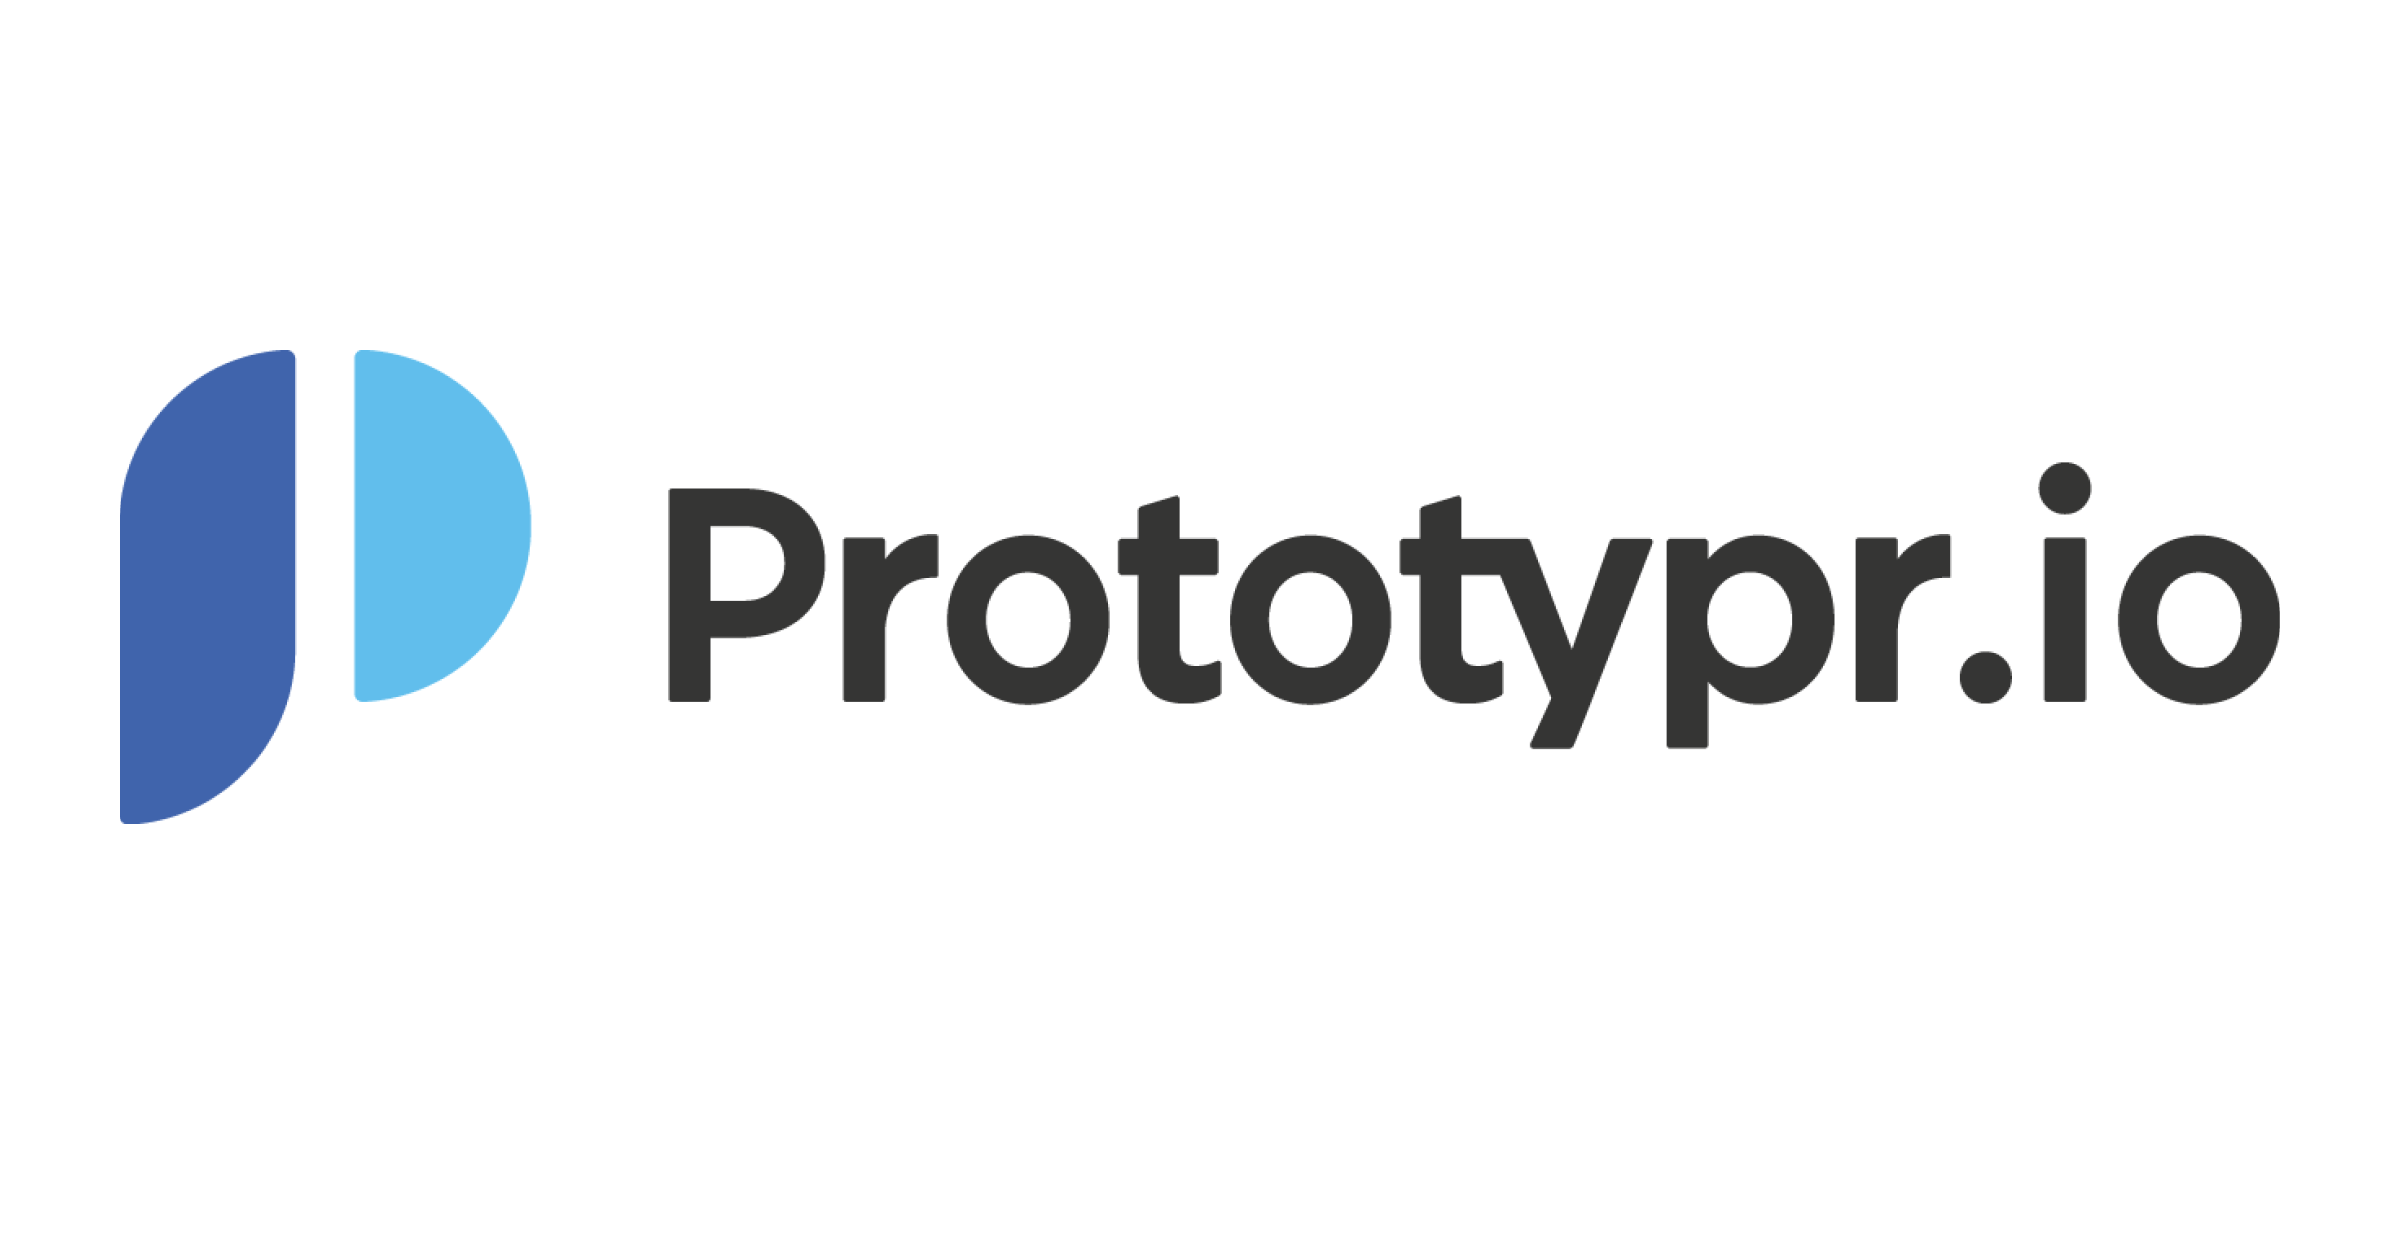 Io Logo - Prototypr: The Latest UX Design News, Prototyping Tools, and ...